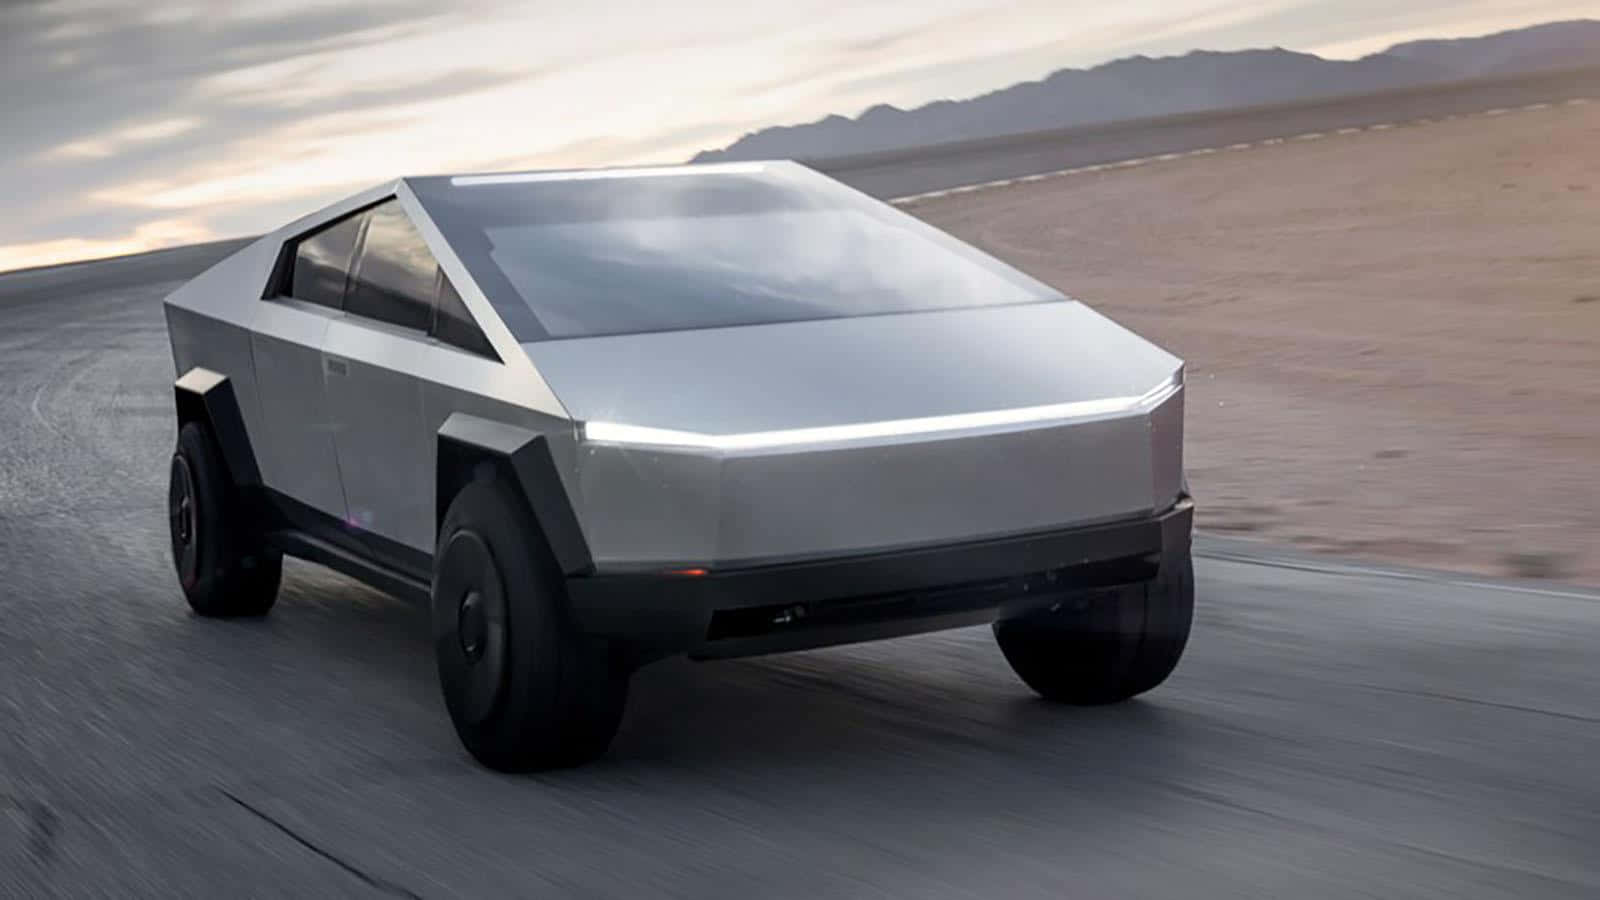 Tesla Cybertruck, the latest in futuristic electric vehicle design Wallpaper